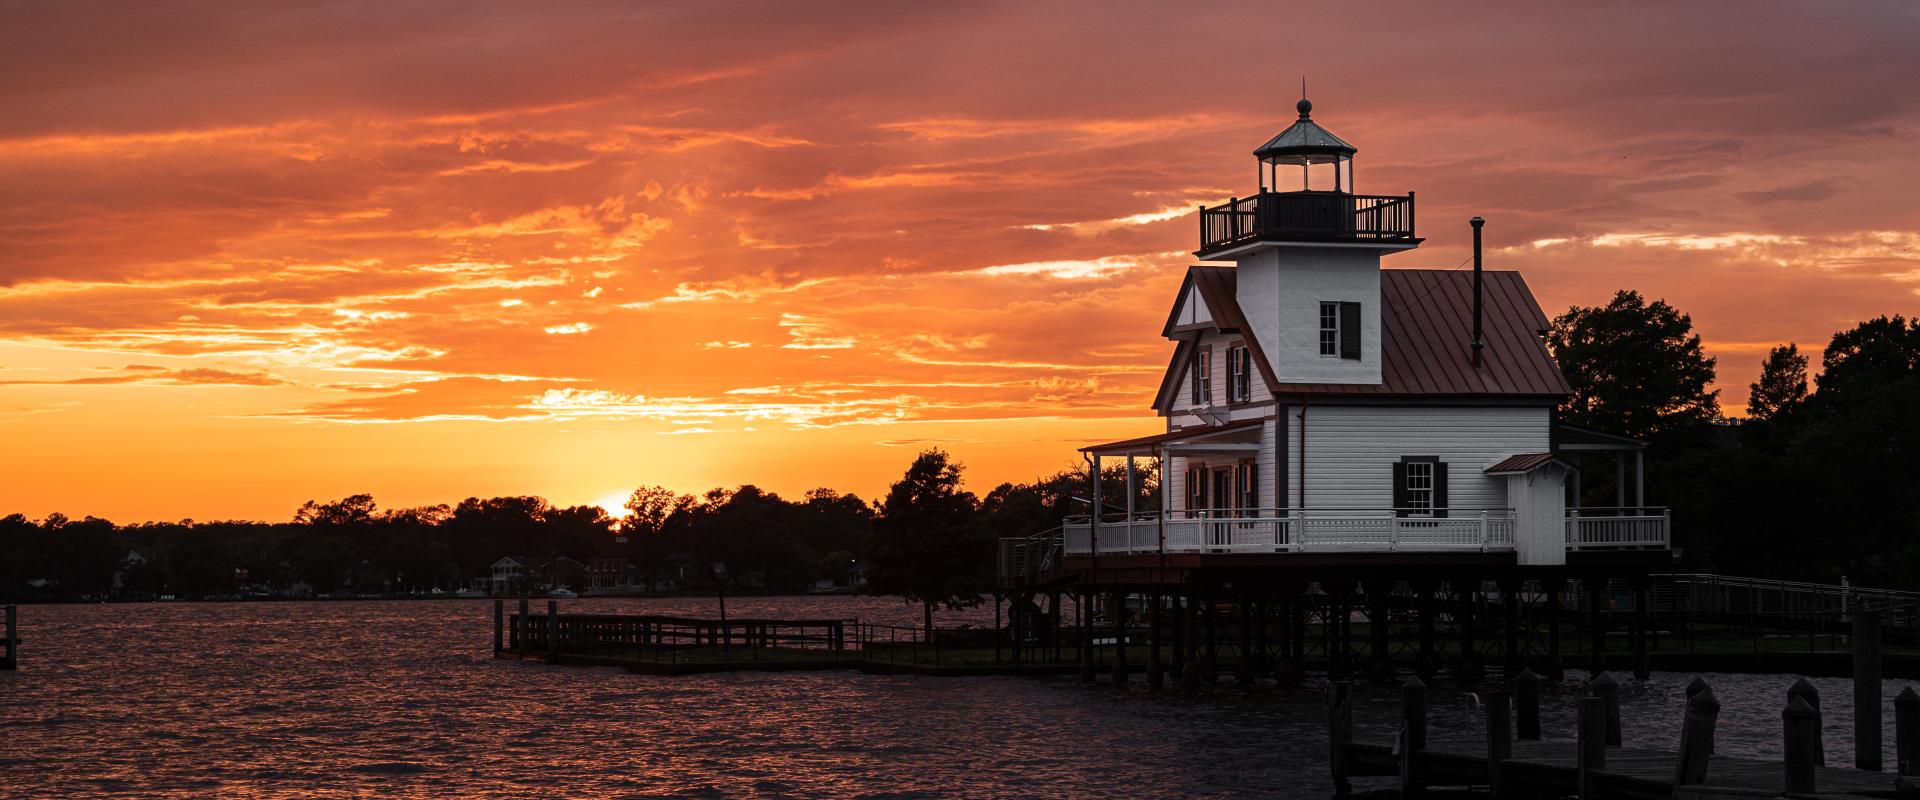 Roanoke River Lighthouse by sunset 